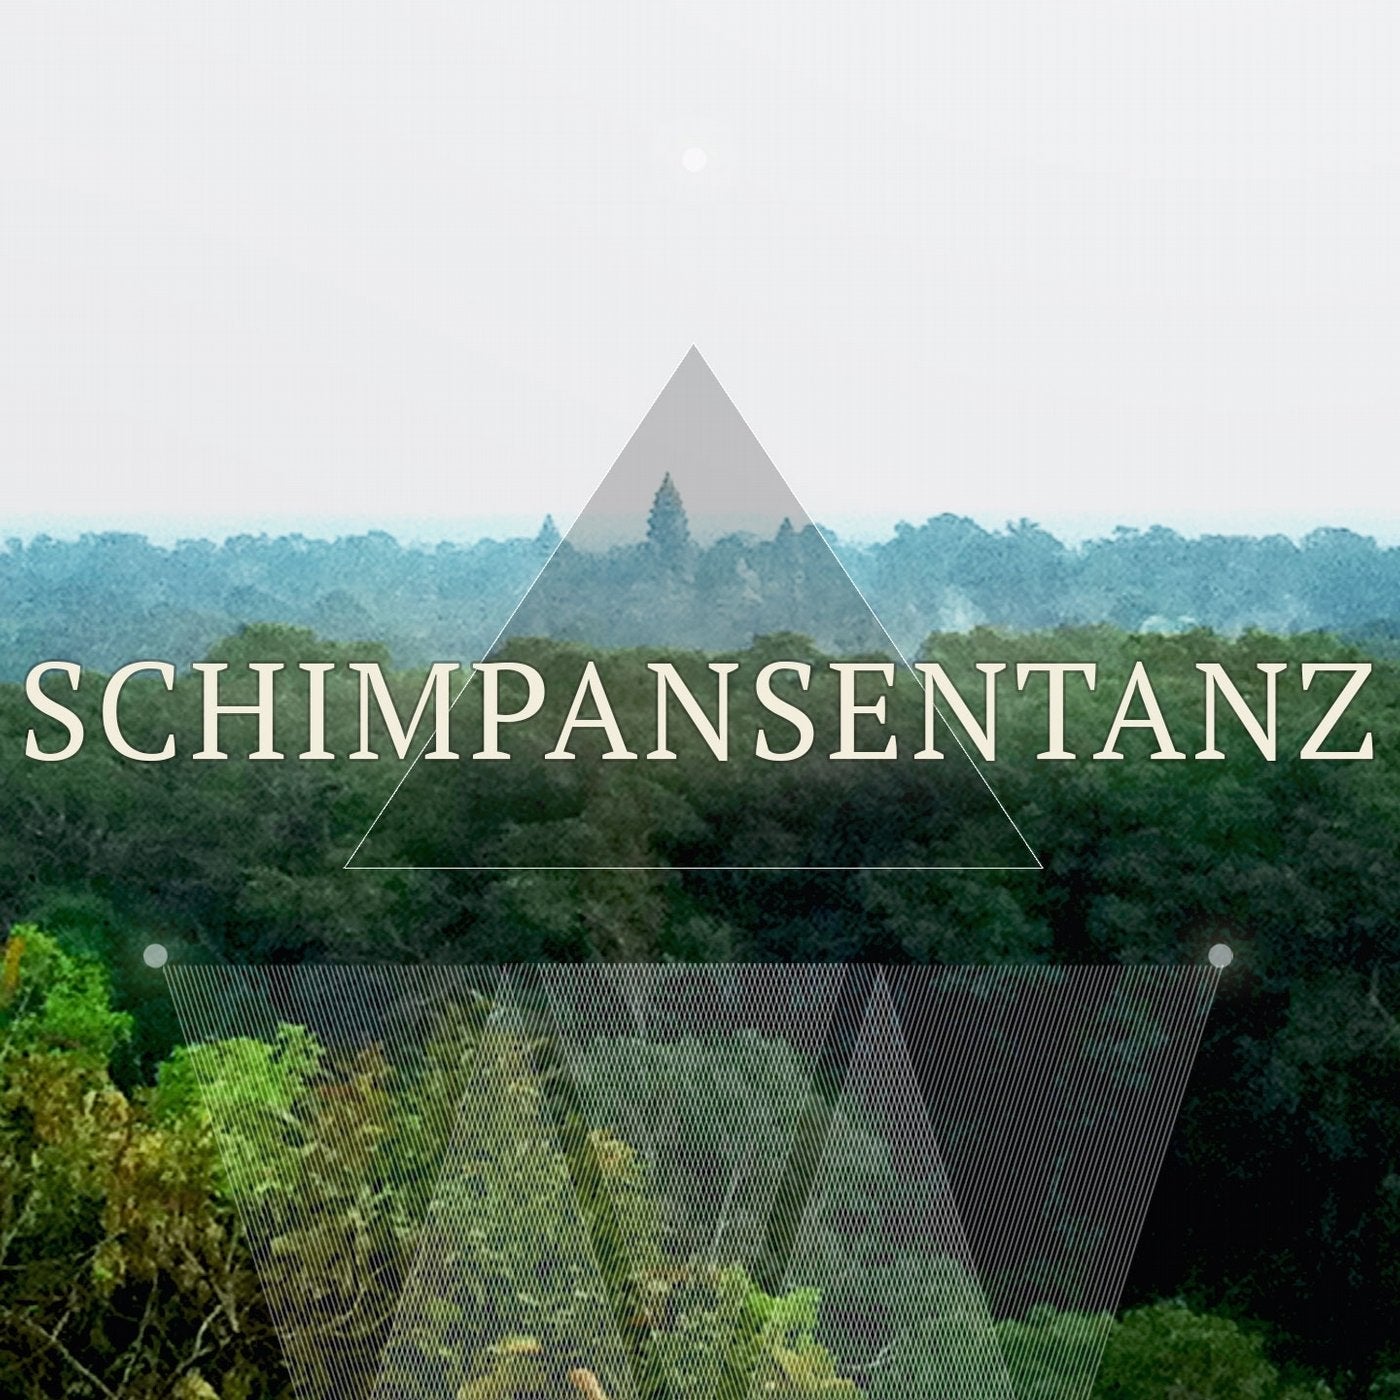 Schimpansentanz, Vol. 1 (Crazy Deep House Compilation)